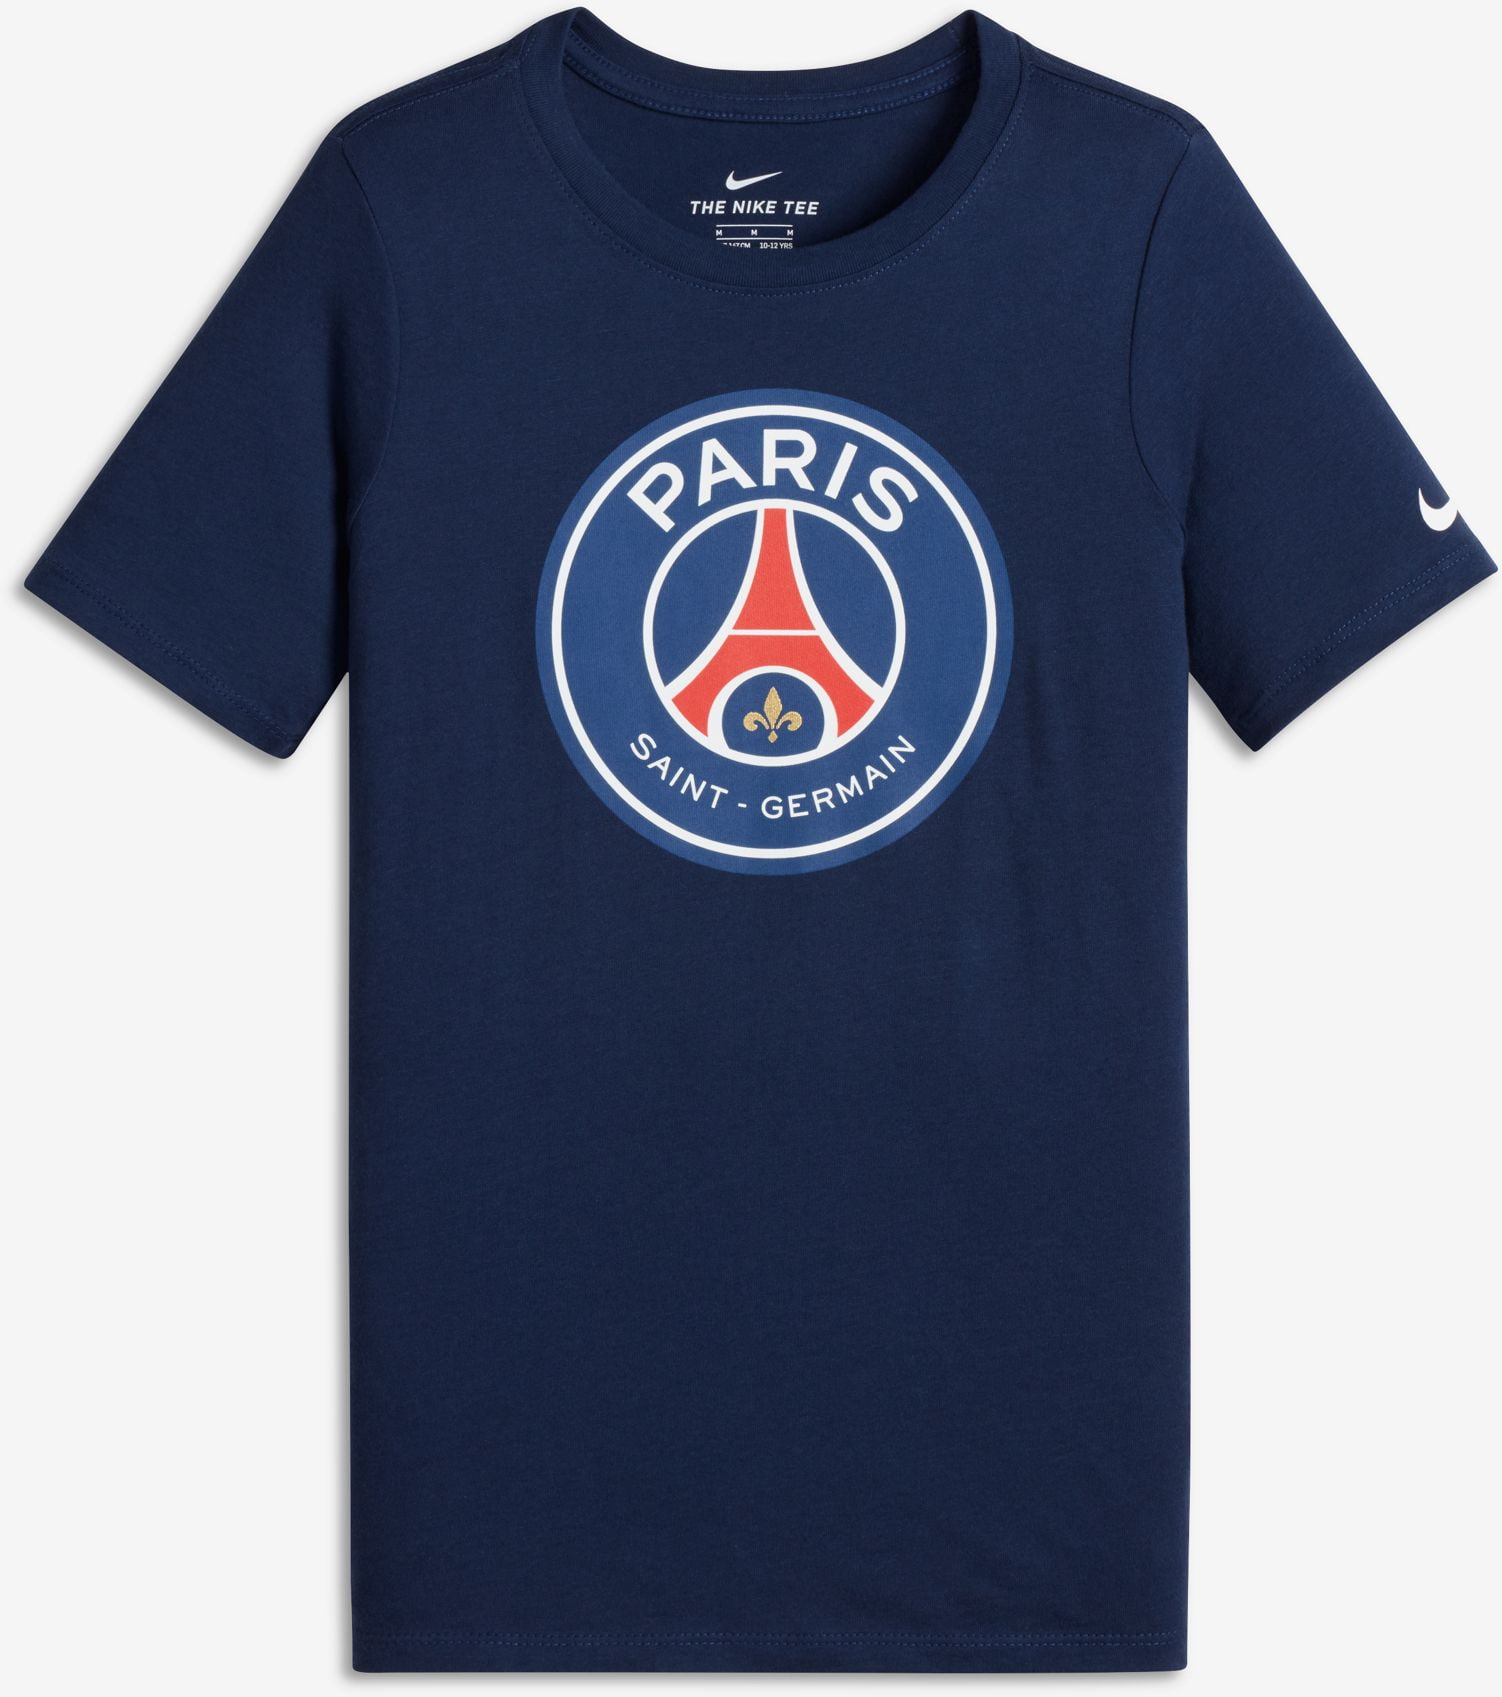 Nike Youth Paris Saint-Germain Navy Crest T-Shirt - Walmart.com ...